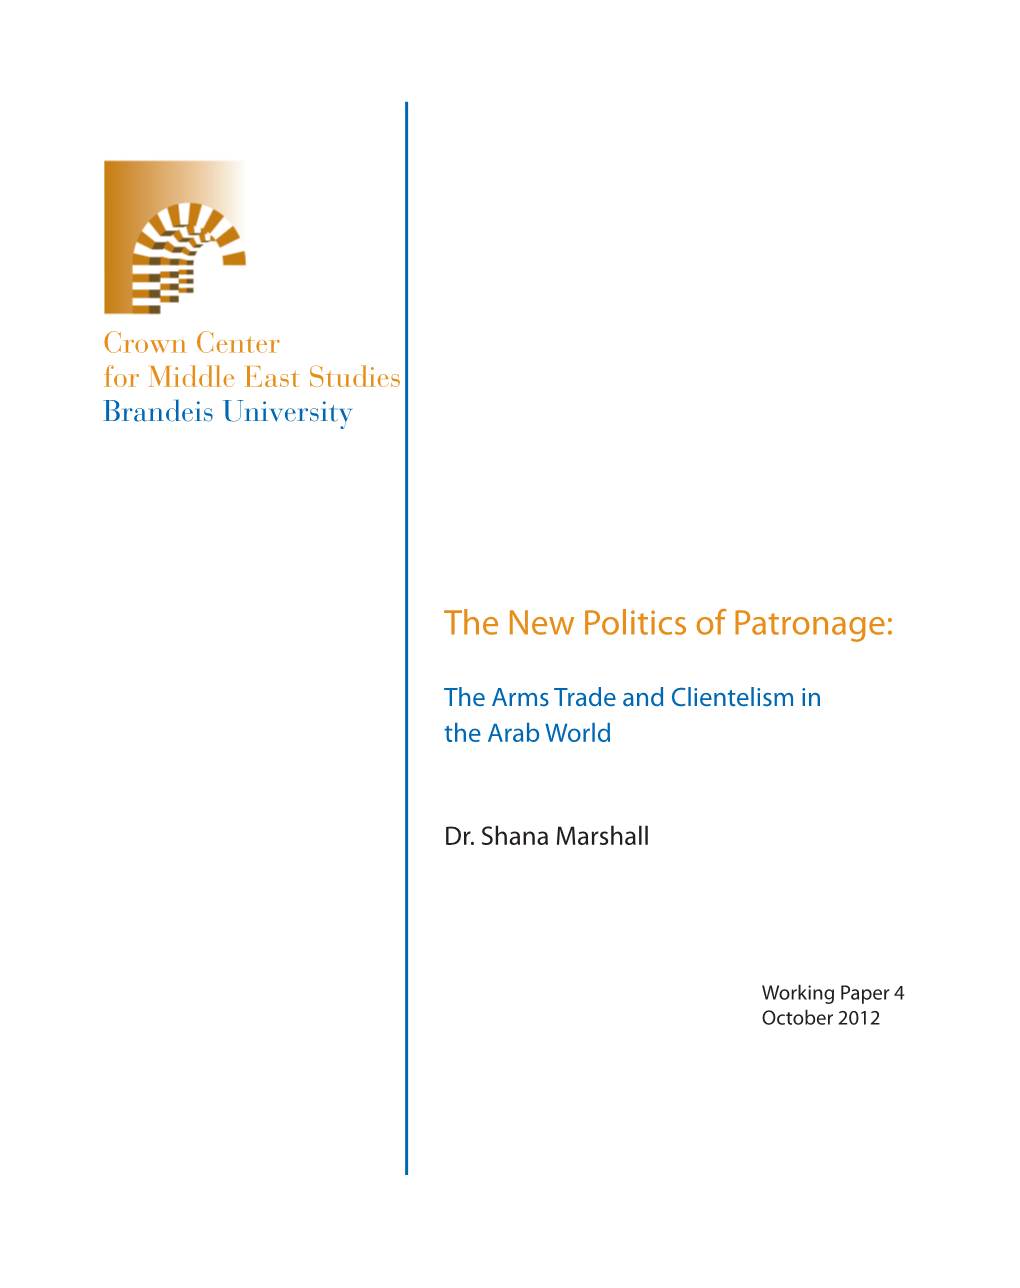 The New Politics of Patronage